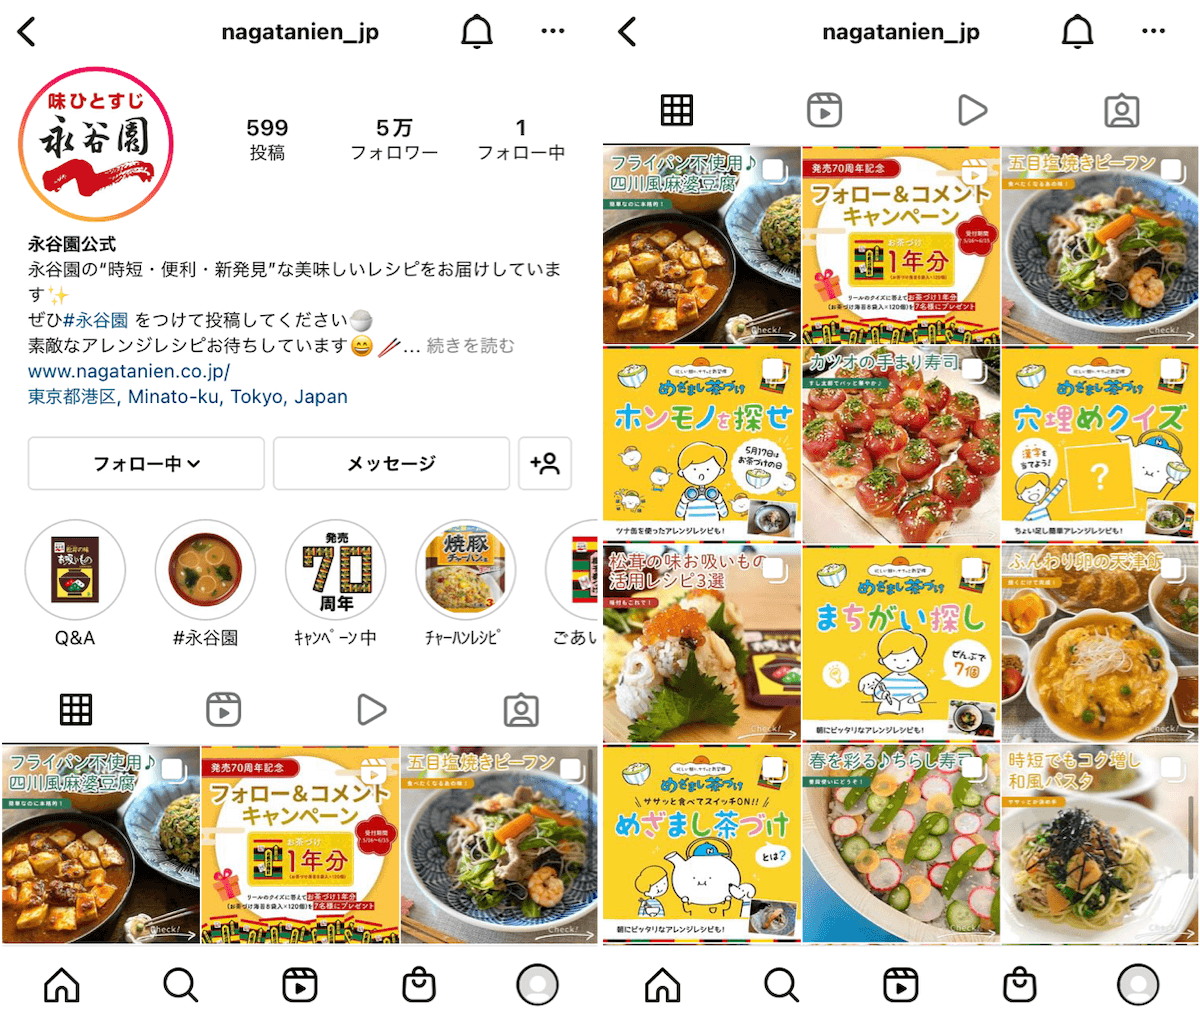 instagram-foods-official-nagatanien_jp